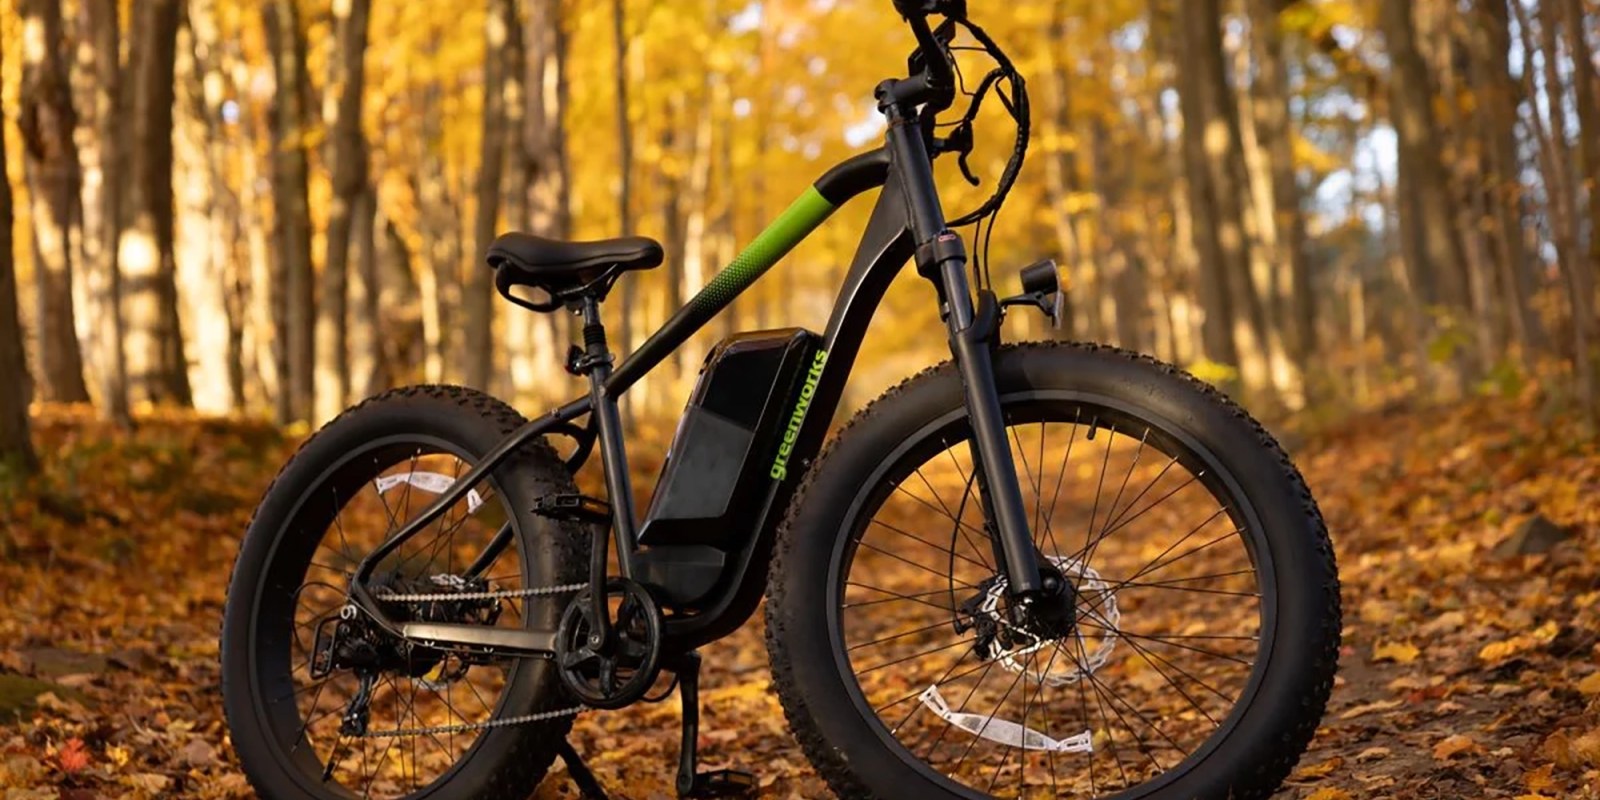 New Venture e-bike $1,575, Eemax water heater $405, more